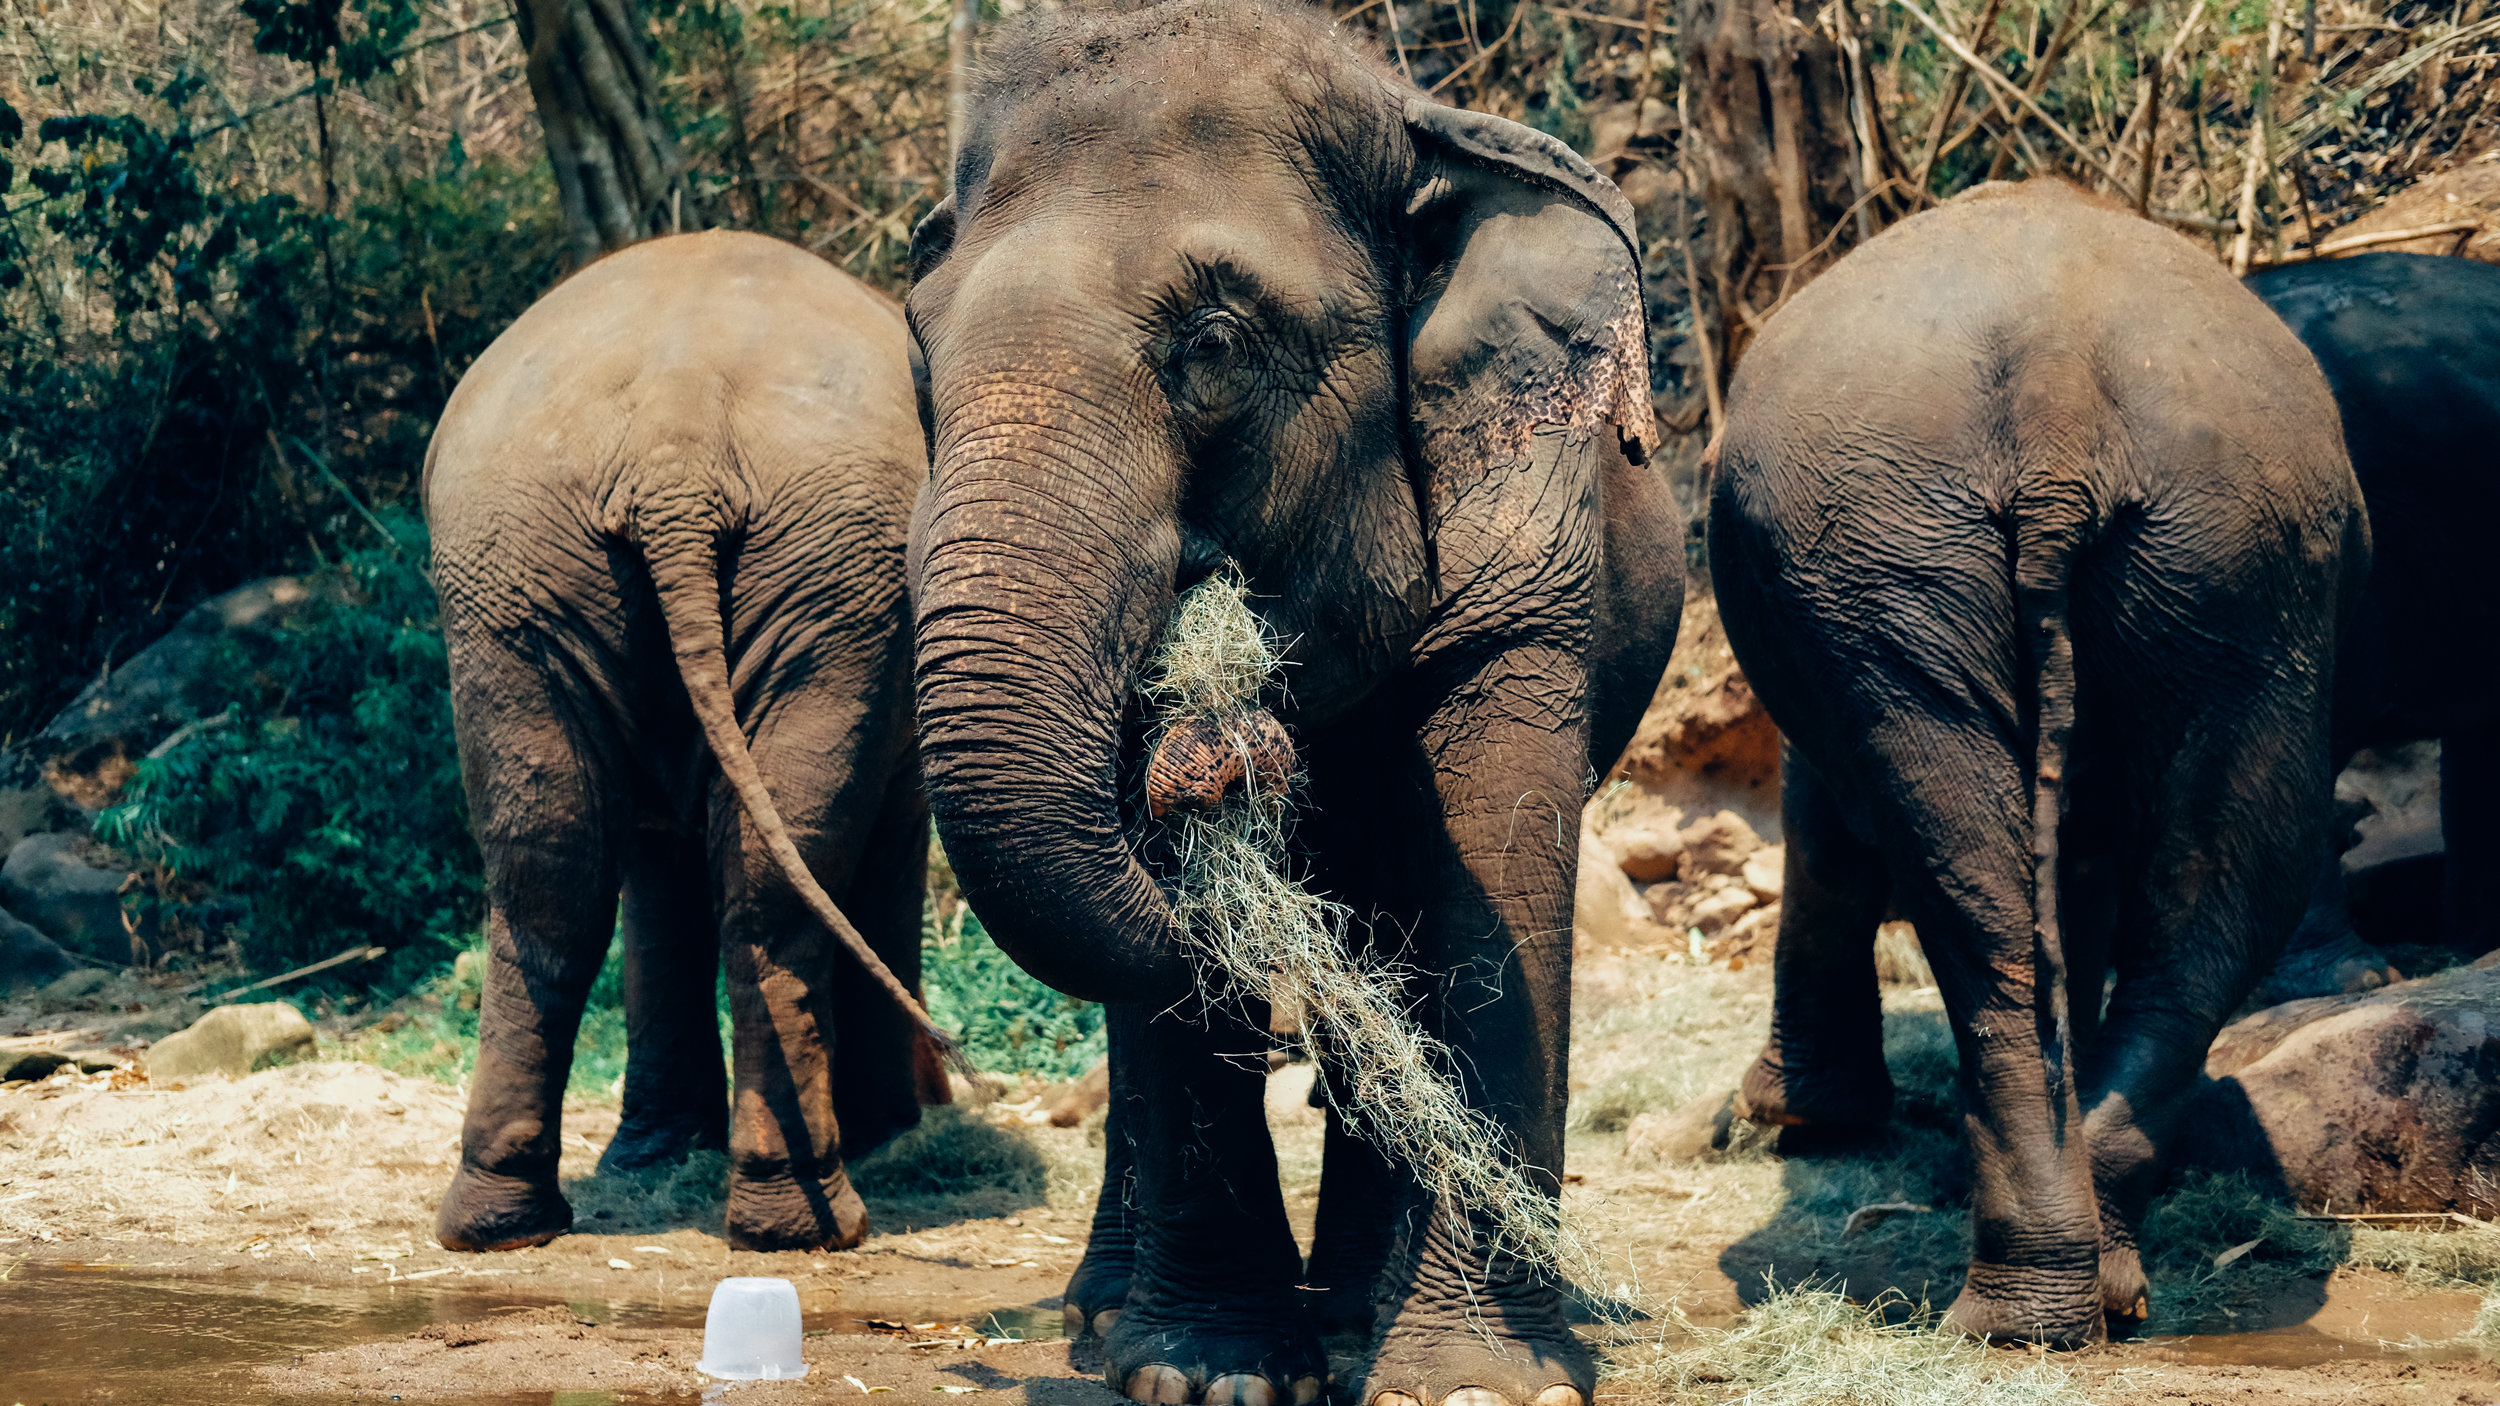 Elephants eating after their bath